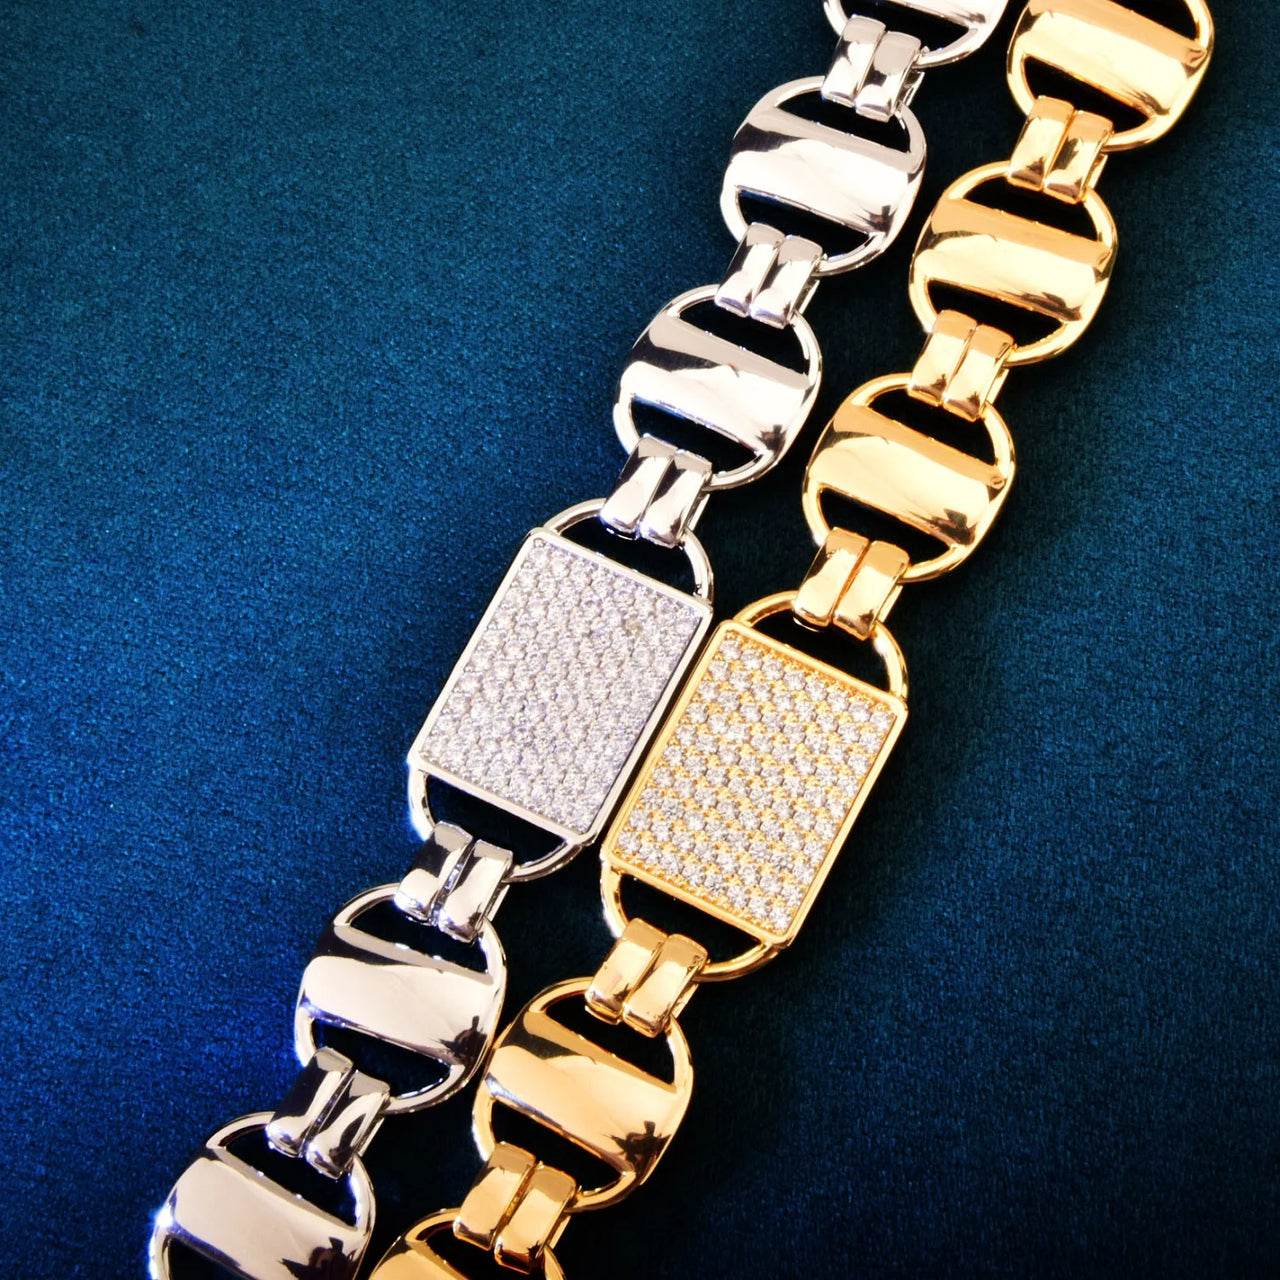 14mm Square Clustered Mariner Link Bracelet - Different Drips